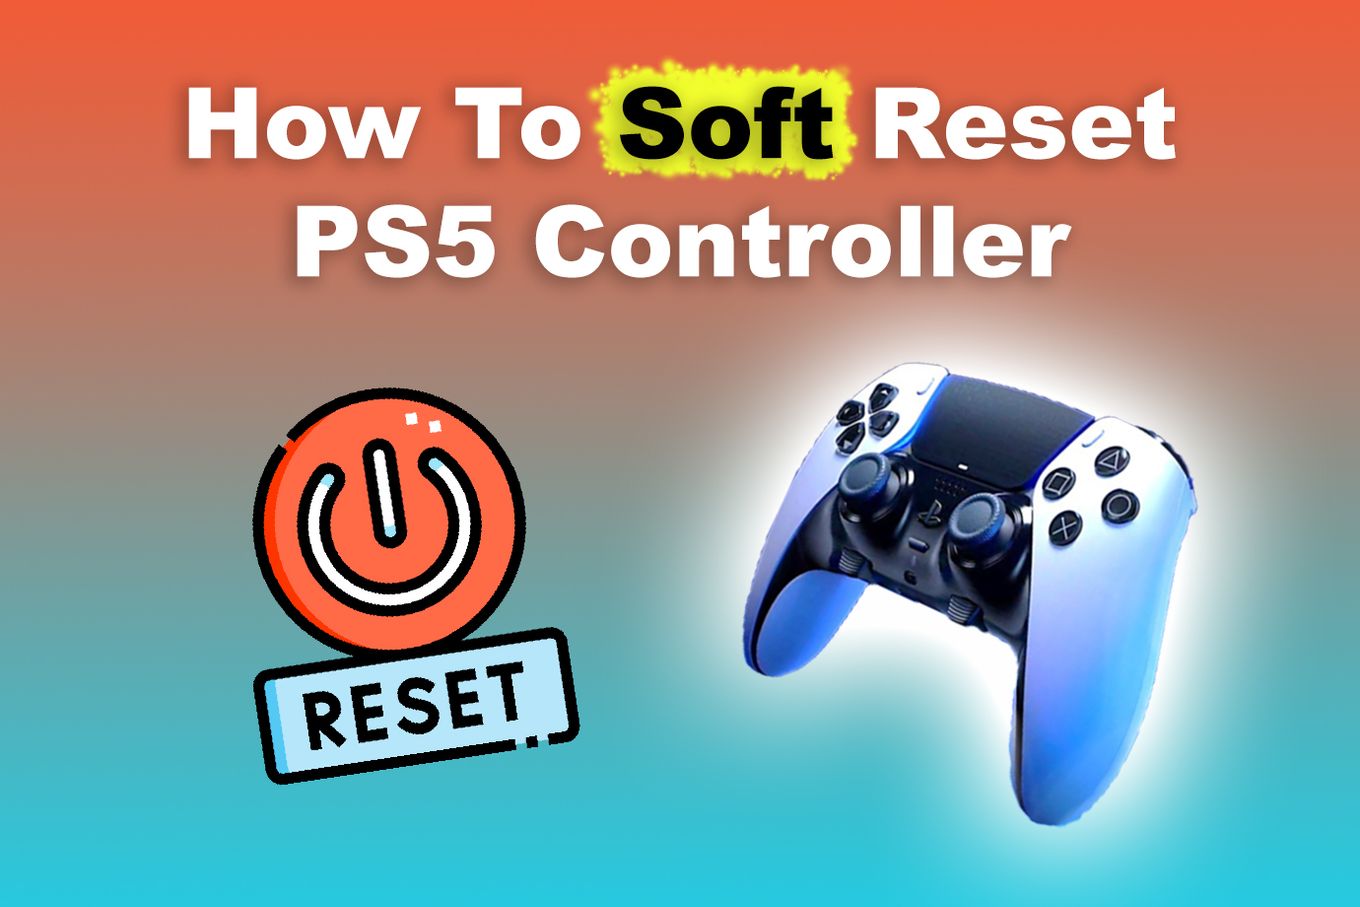 Soft Reset PS5 Controller